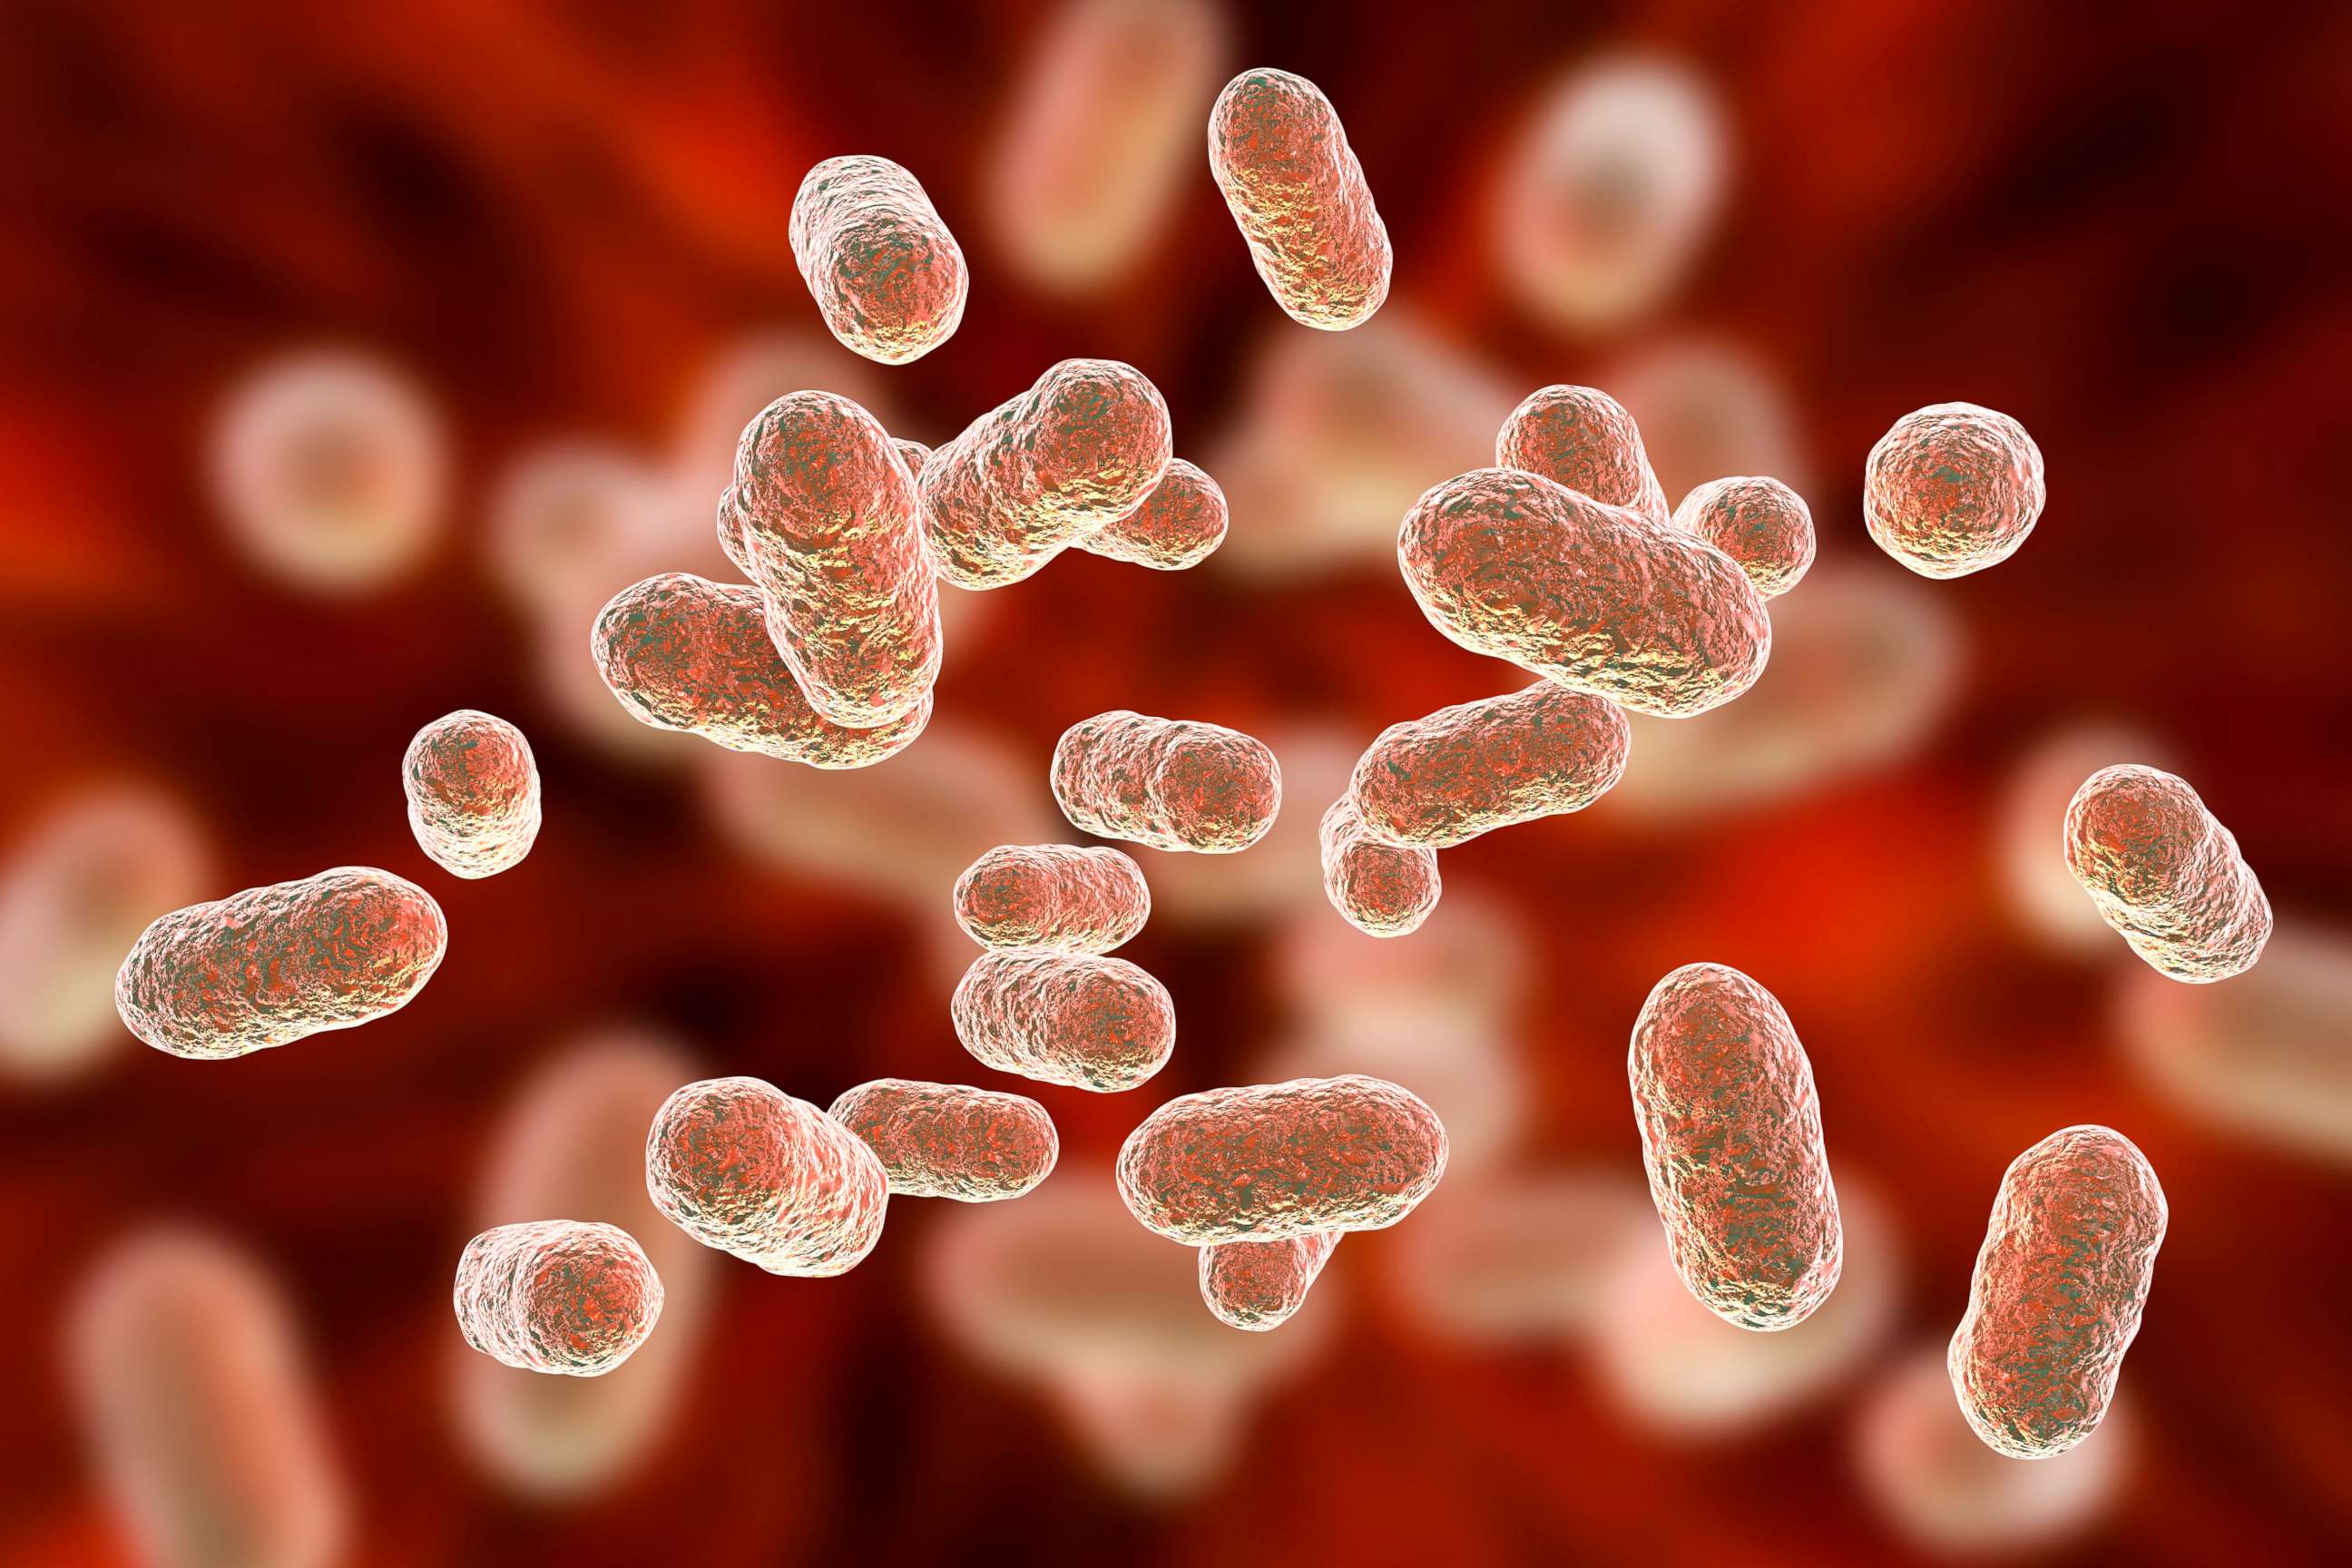 PHOTO: Close-up of bacterium